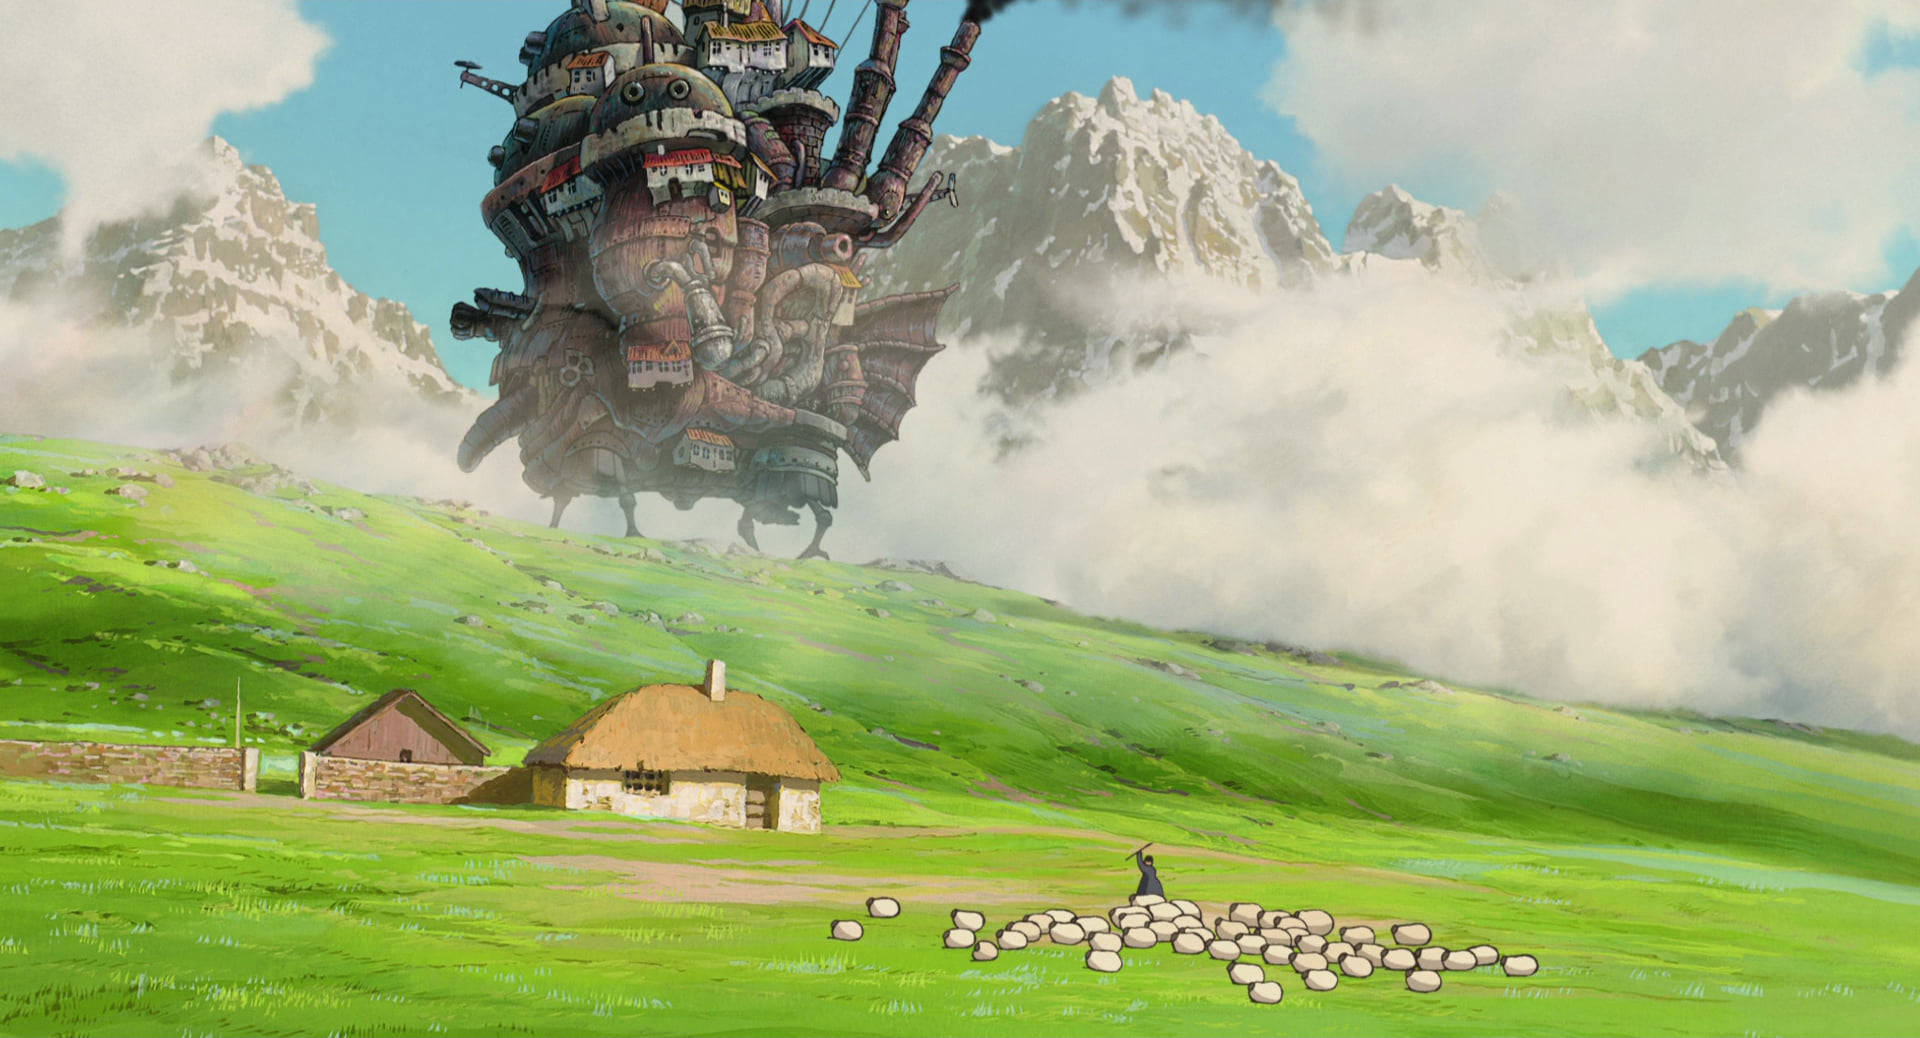 Studio Ghibli Scenery Of Sheep On Farm Wallpaper